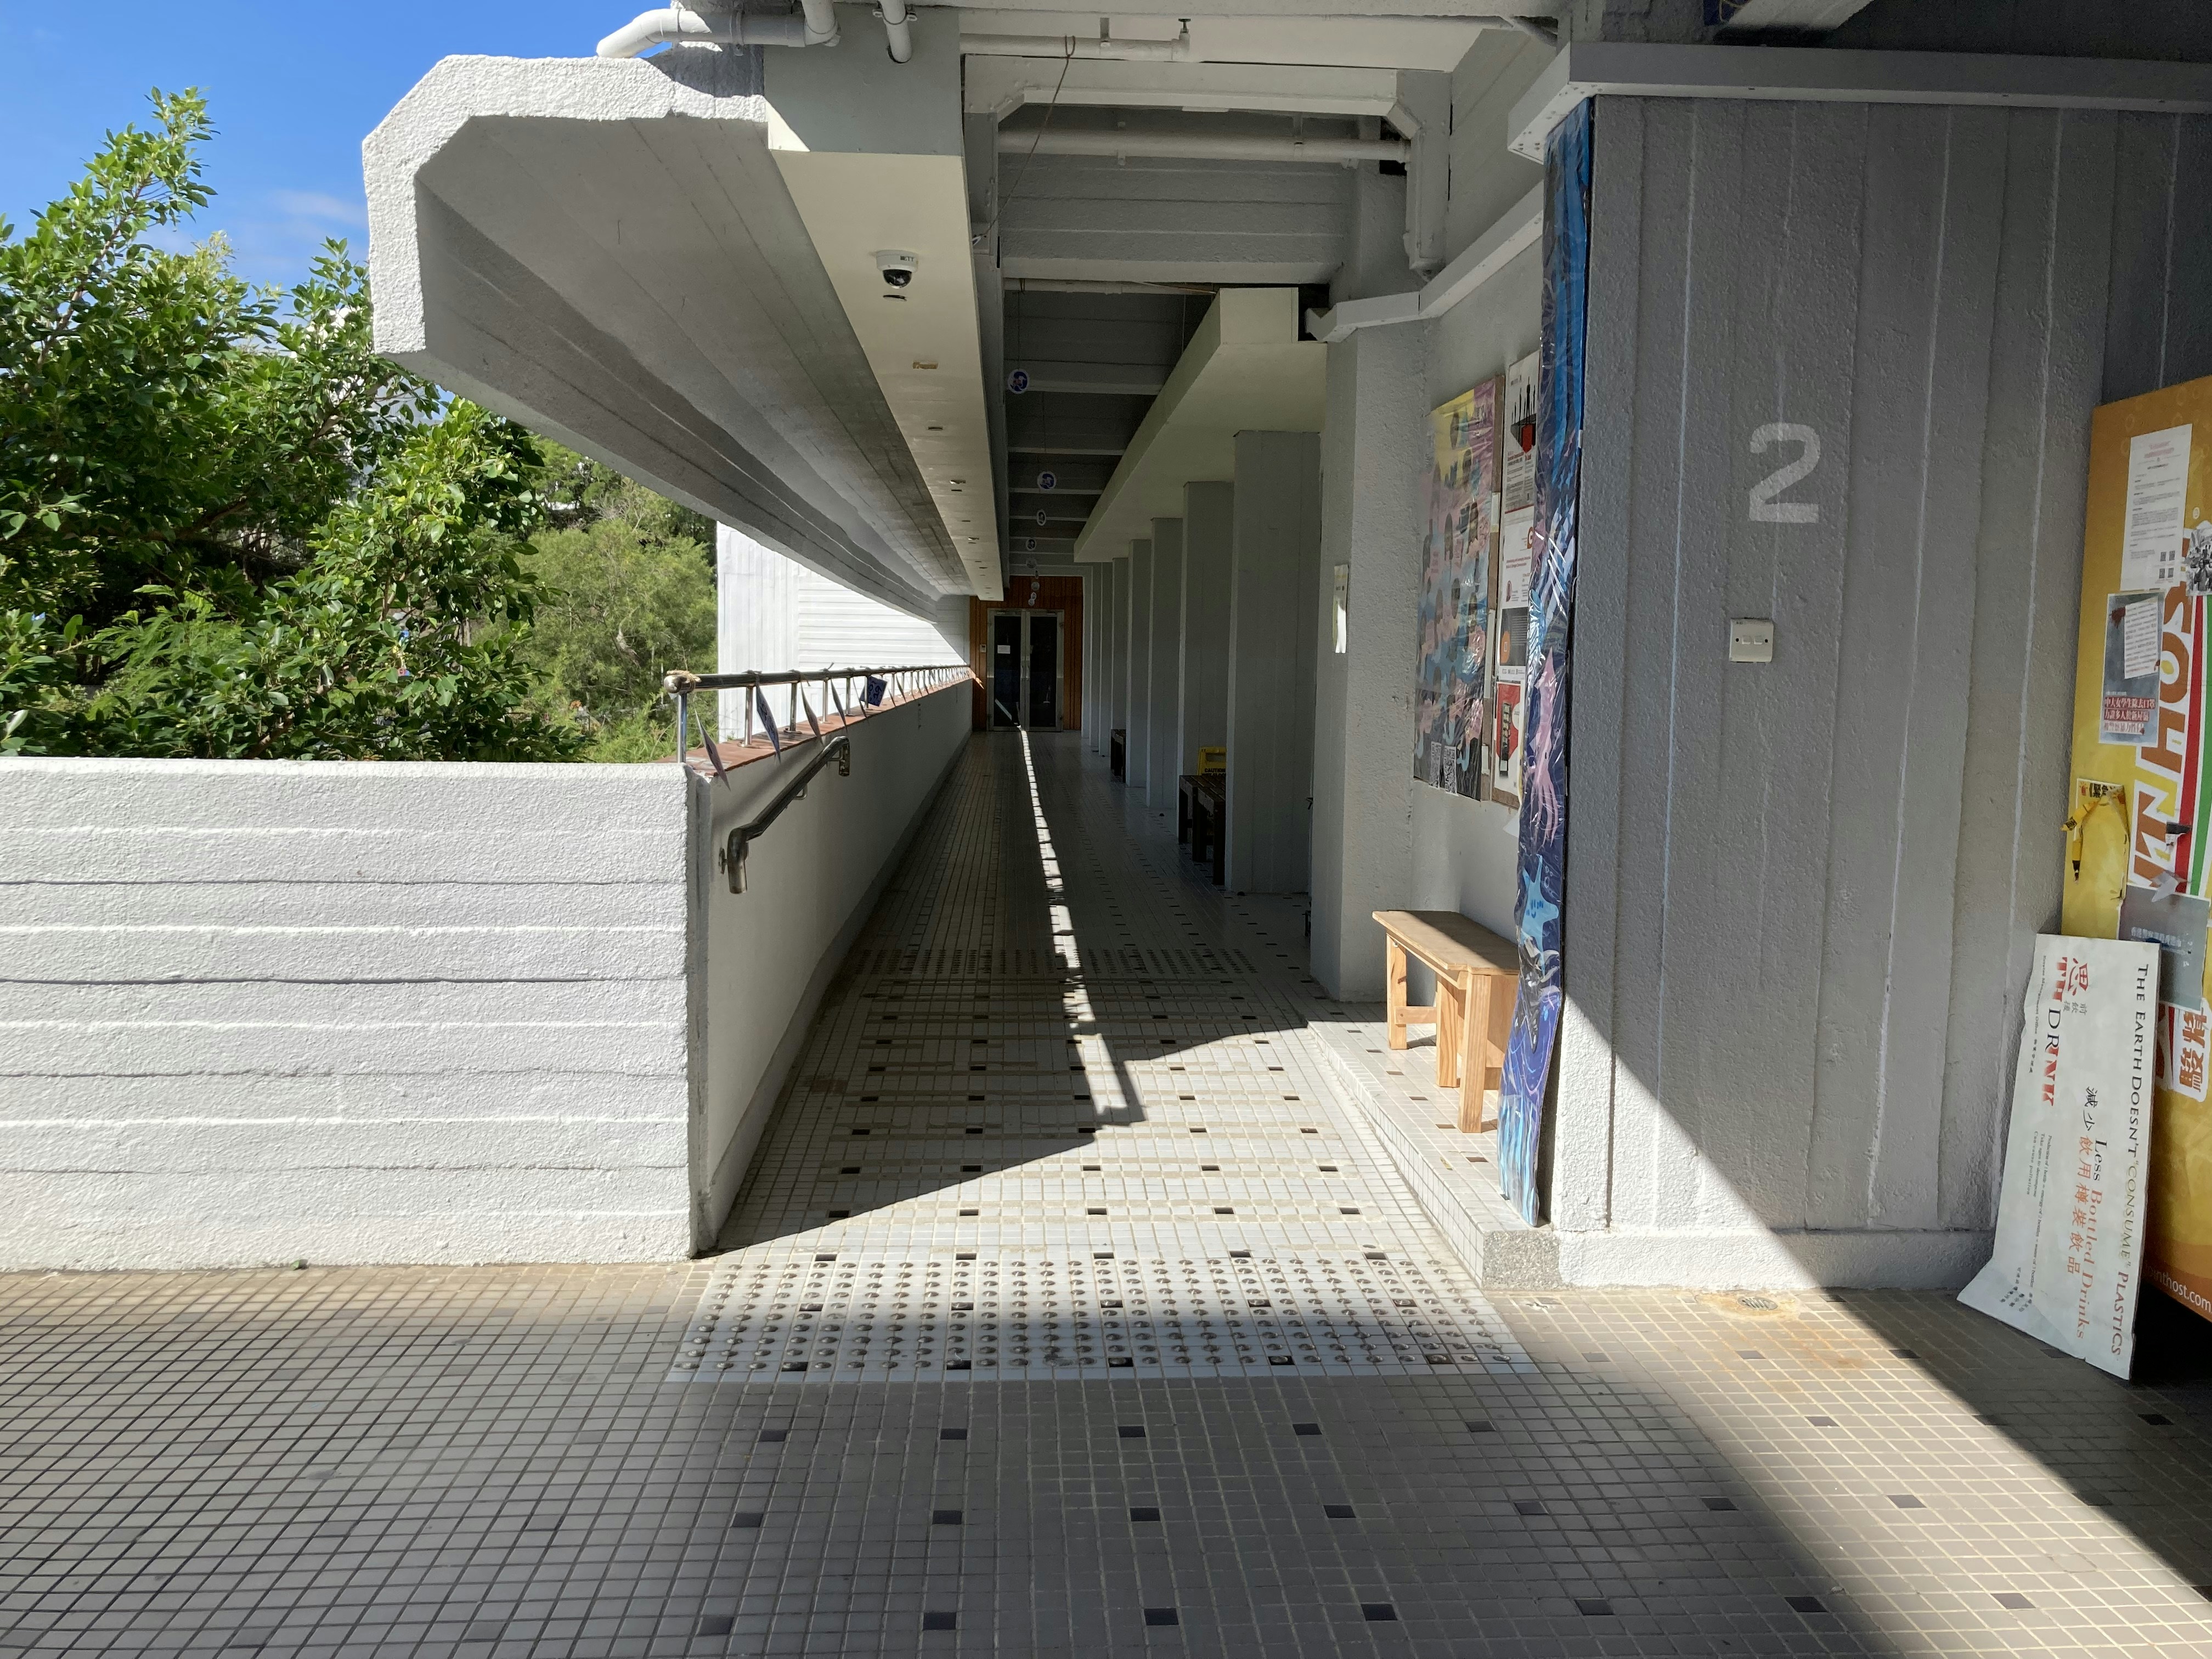 Corridor in Early Moring